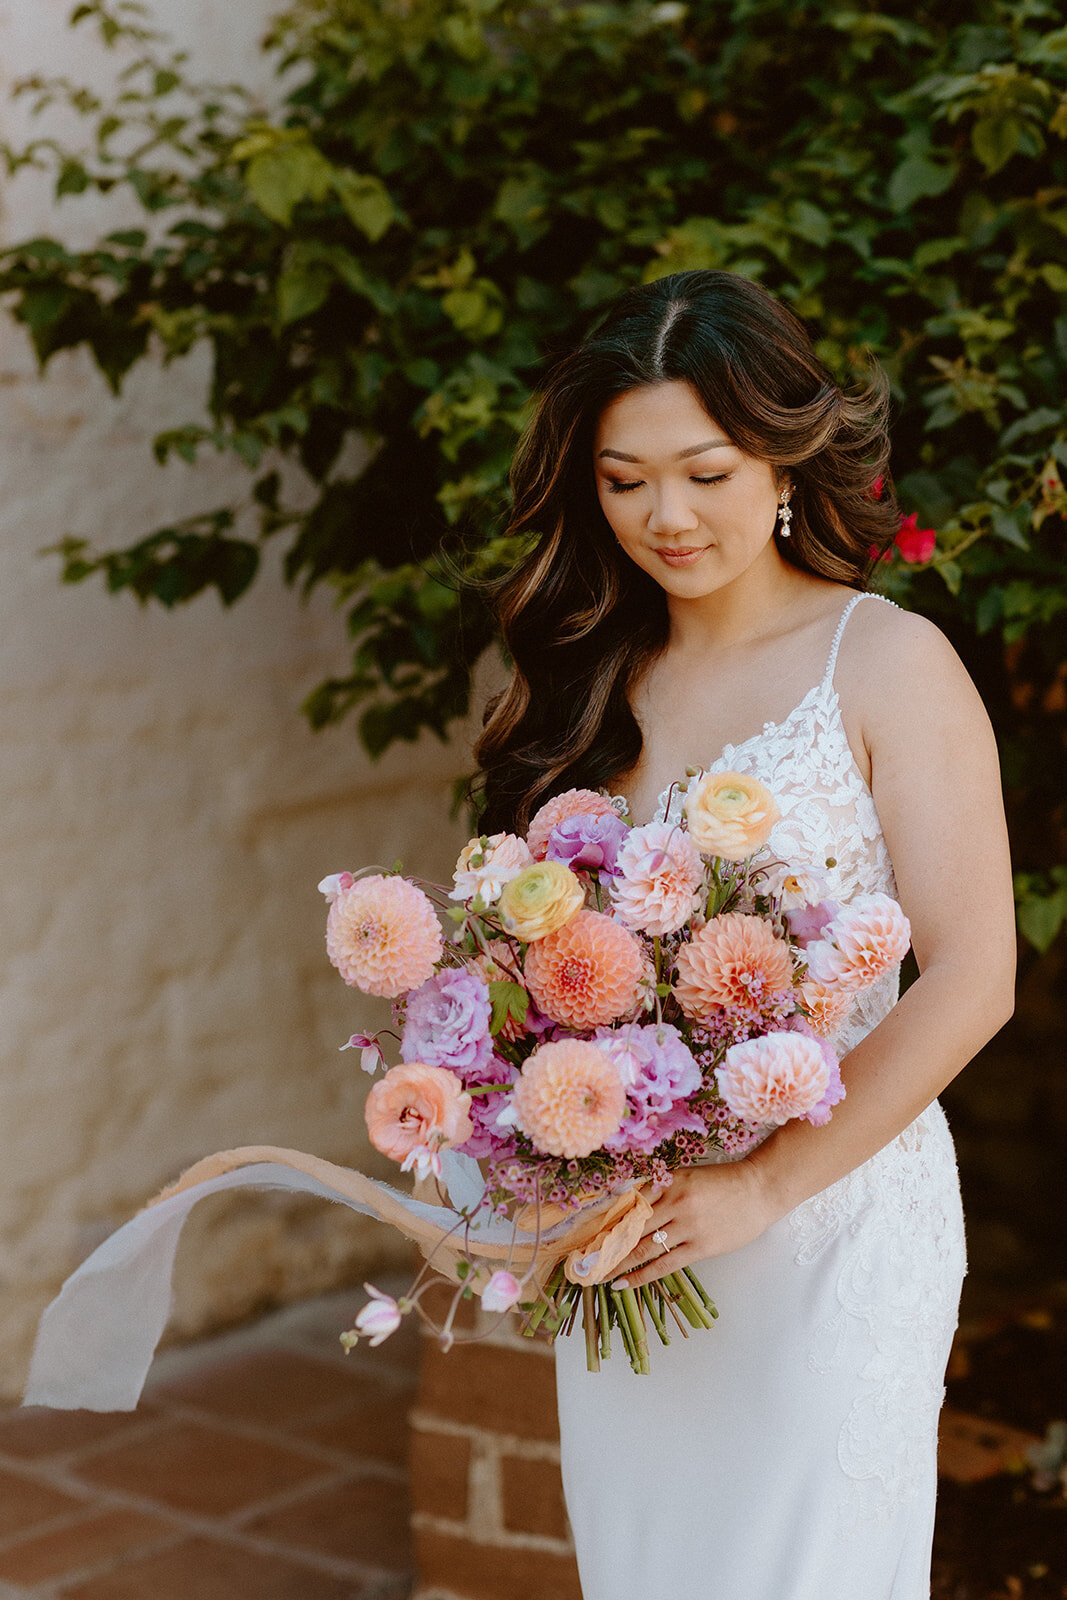 Bride holding a colorful bouquet